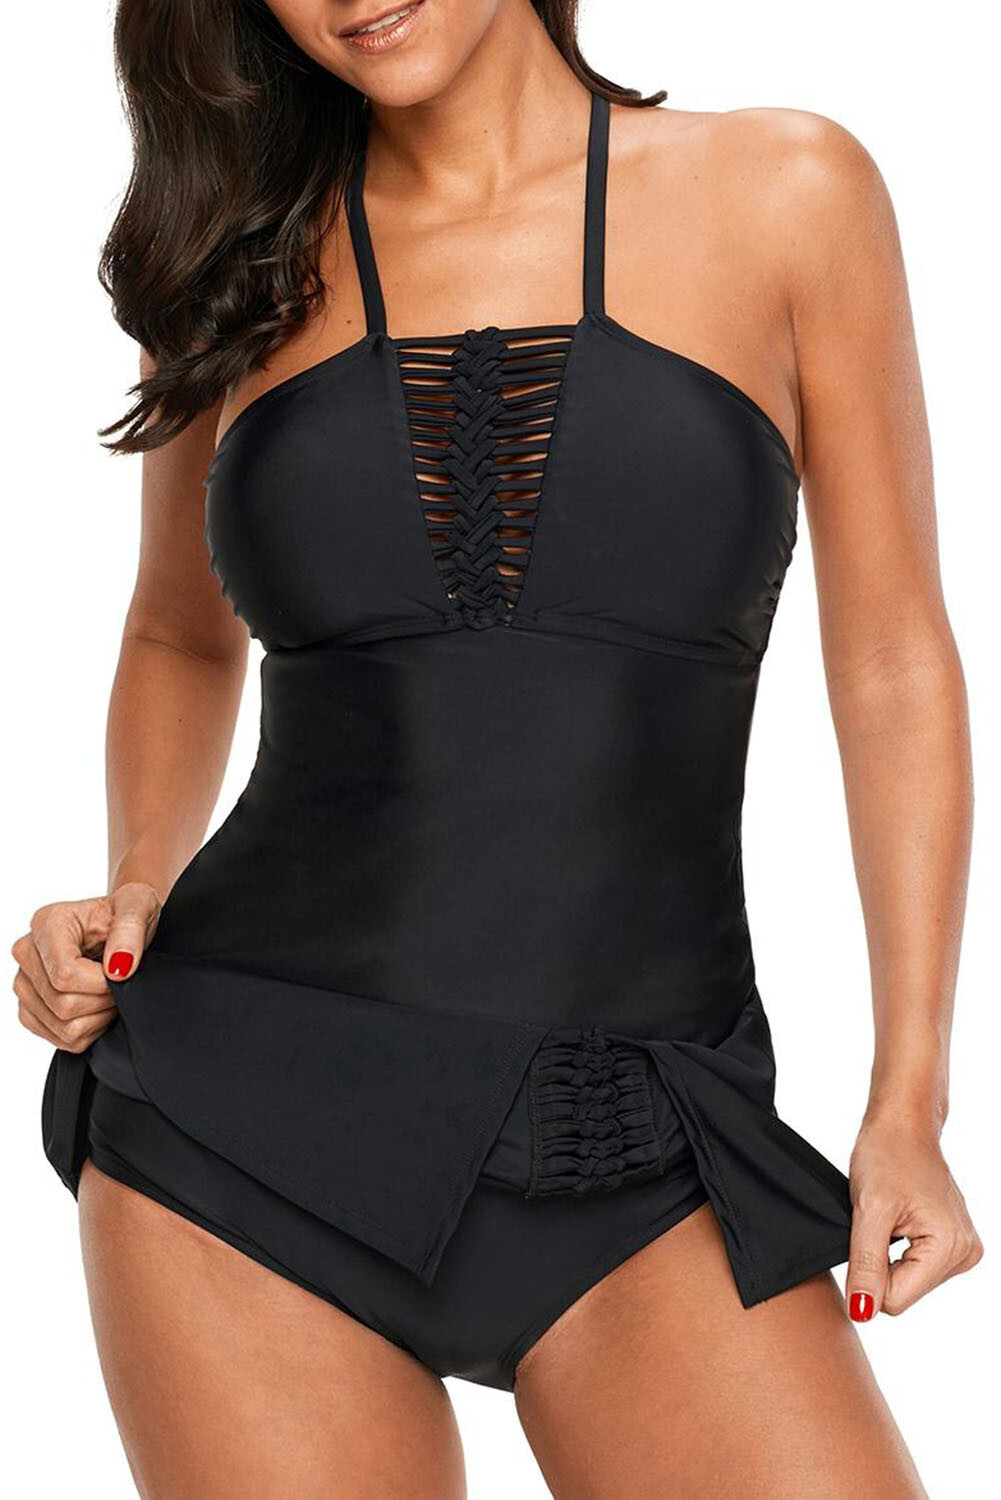 Braided Design Tankini Swimsuit Set - Black